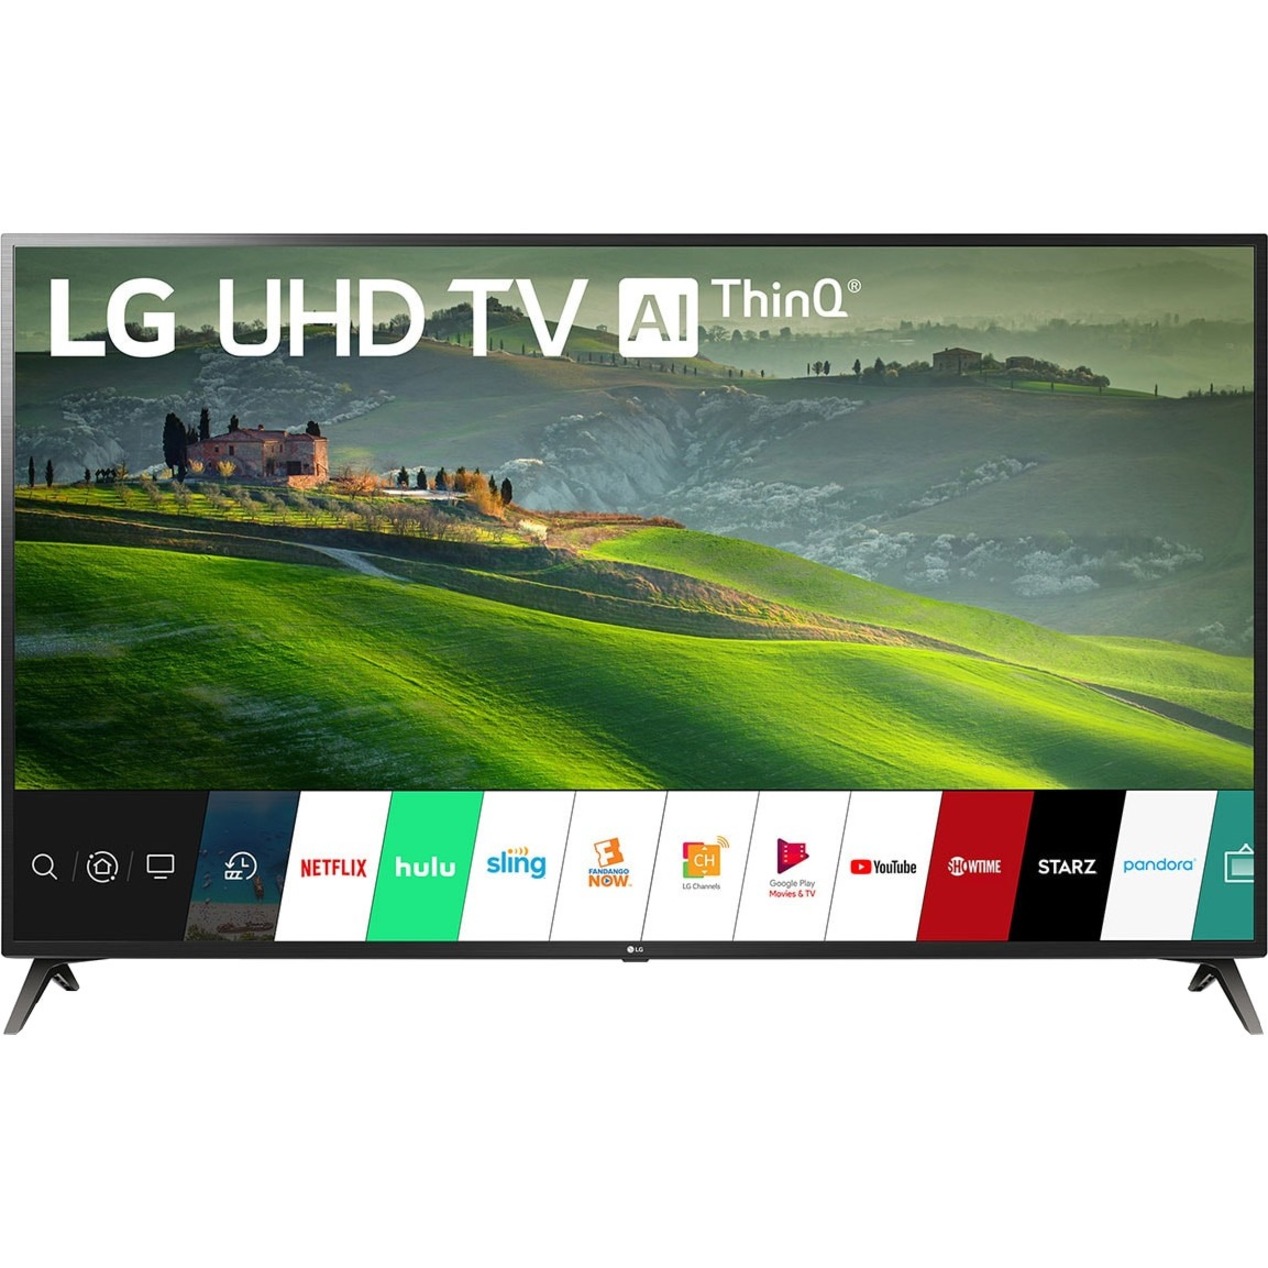 LG 70" Class 4K UHDTV (2160p) HDR Smart LED-LCD TV - image 1 of 5